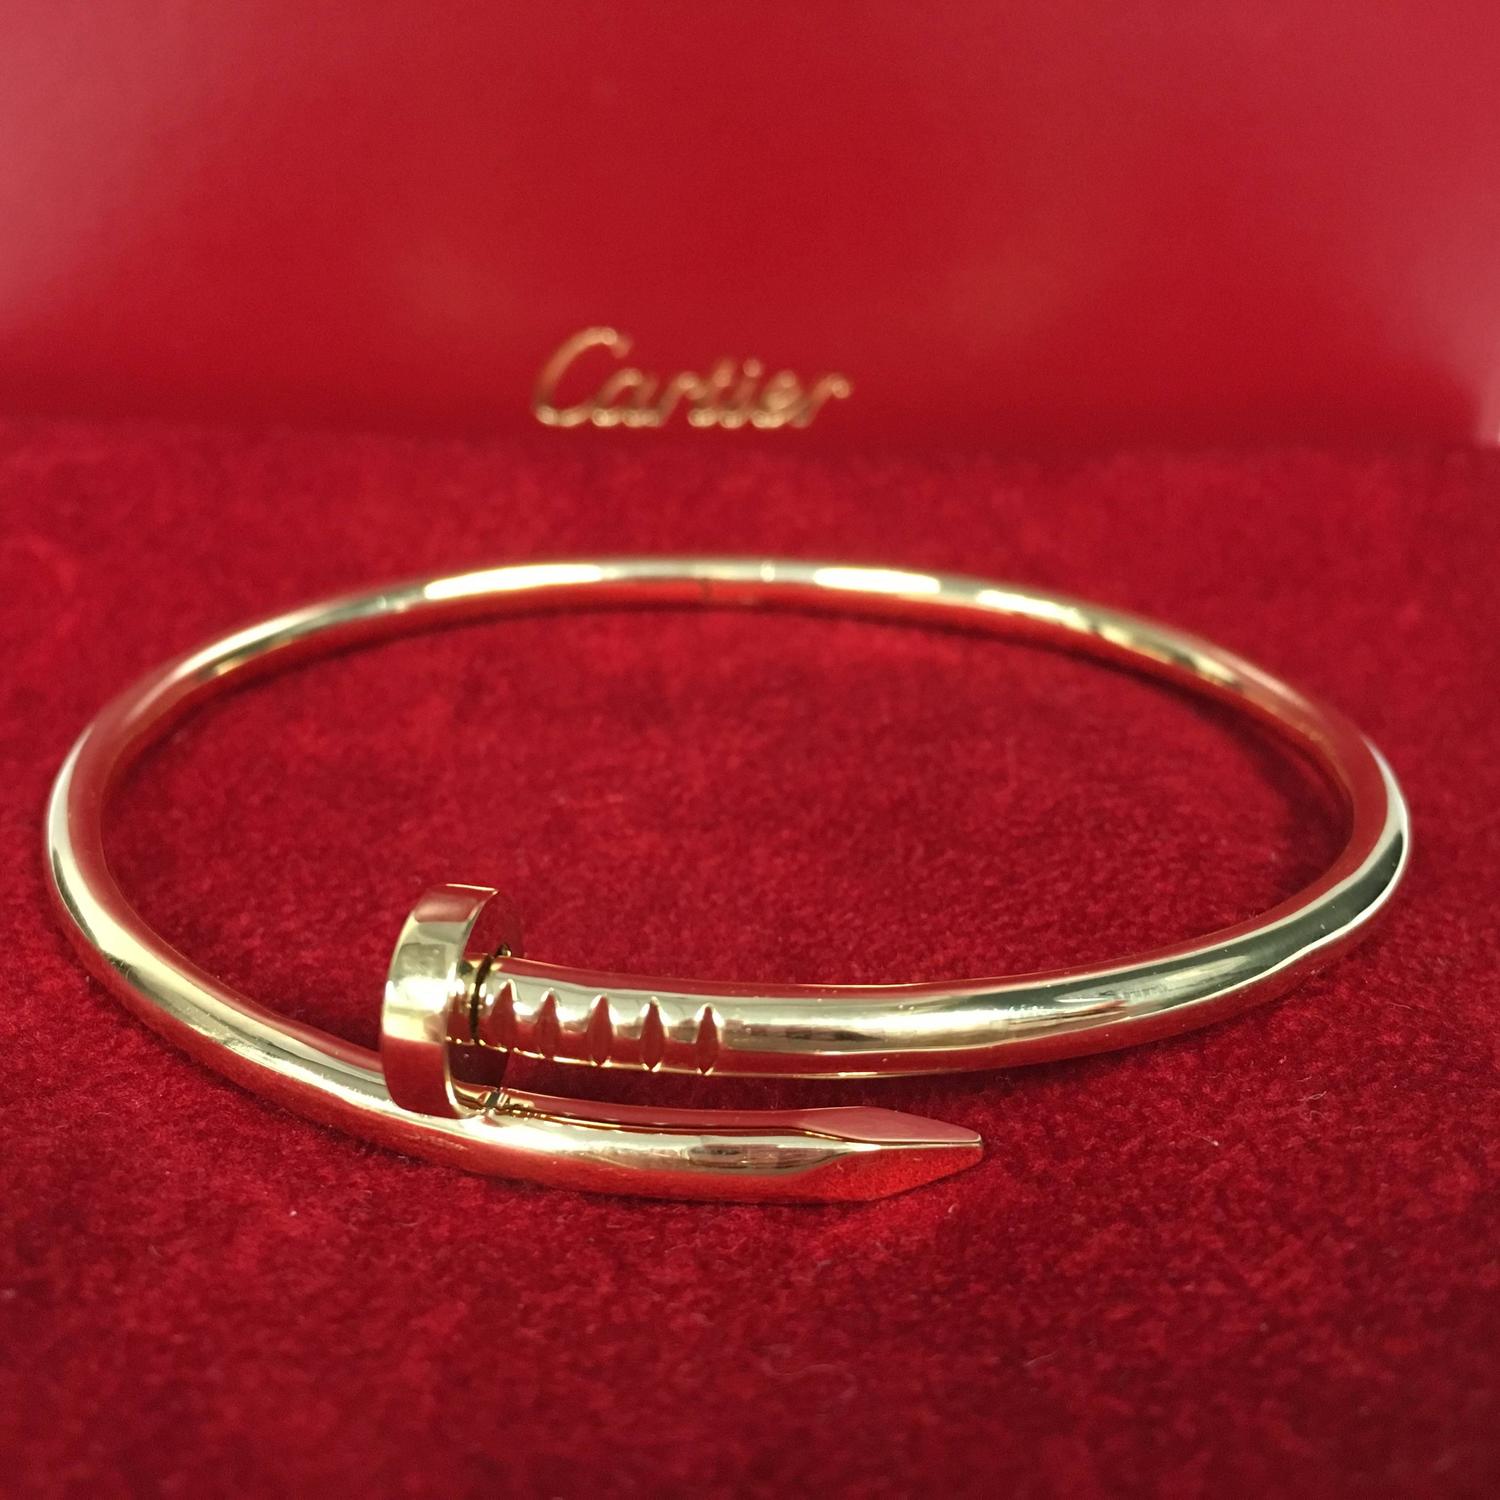 Cartier Juste Un Clou Yellow Gold Bracelet Size 21 at 1stdibs